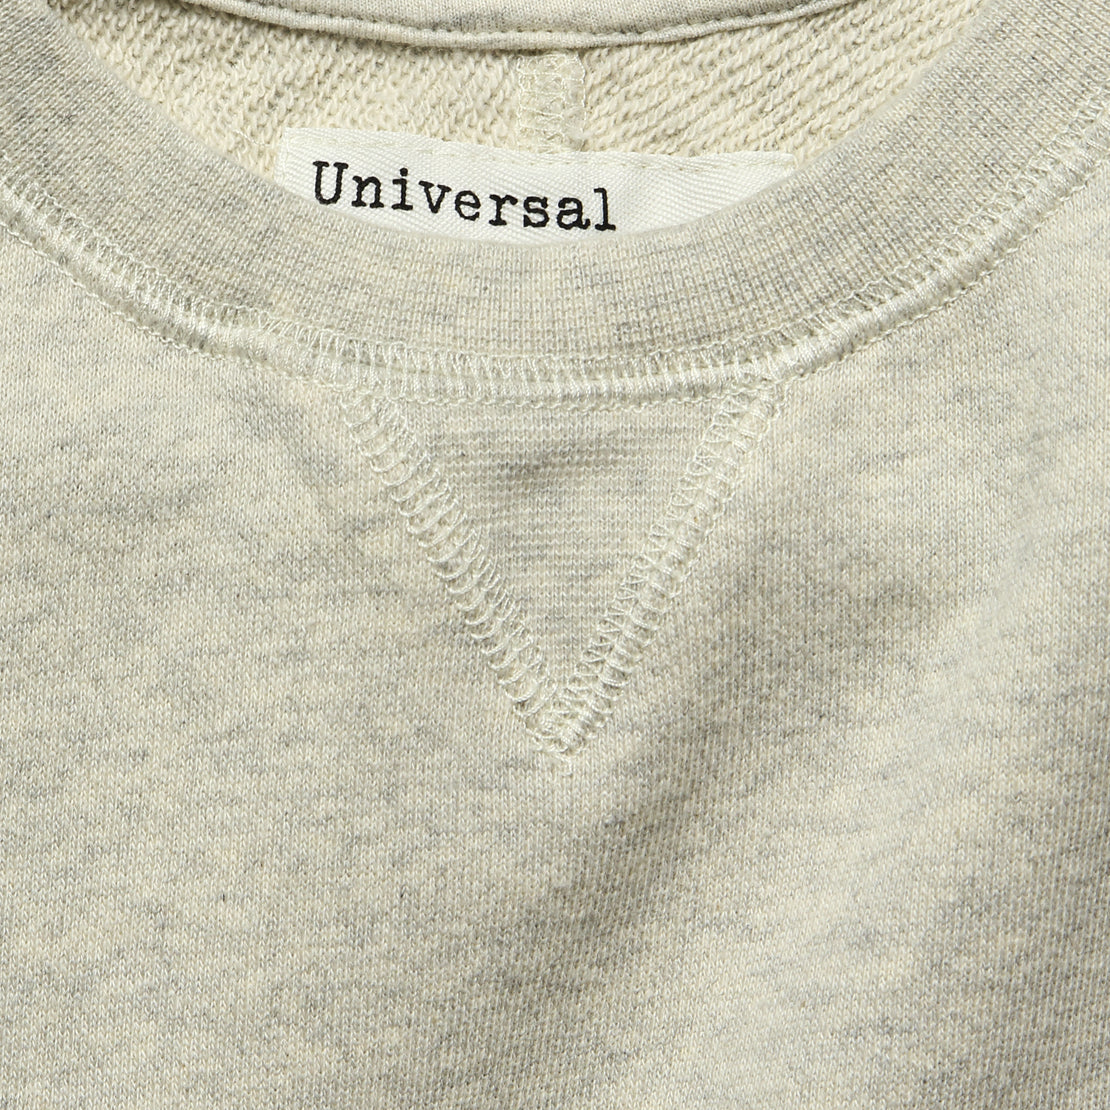 Crew Fleece Sweatshirt - Sand Marl - Universal Works - STAG Provisions - Tops - Fleece / Sweatshirt